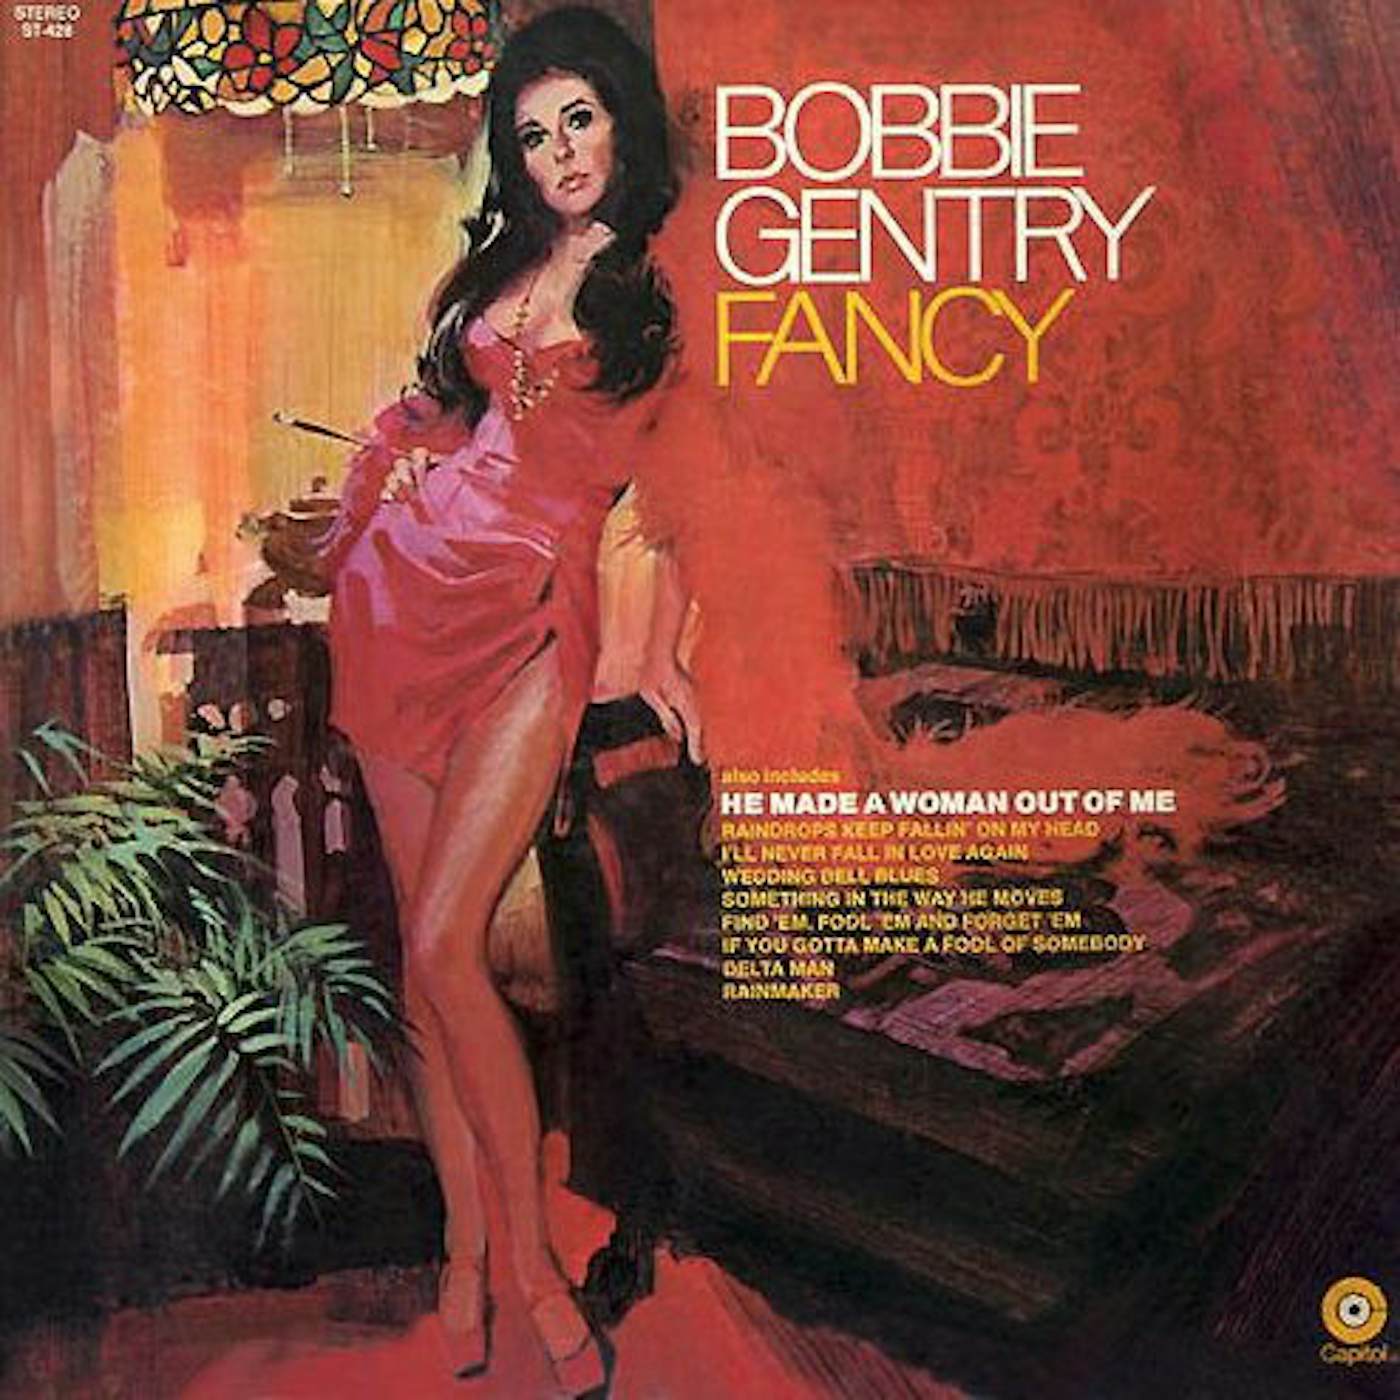 Bobbie Gentry Fancy Vinyl Record